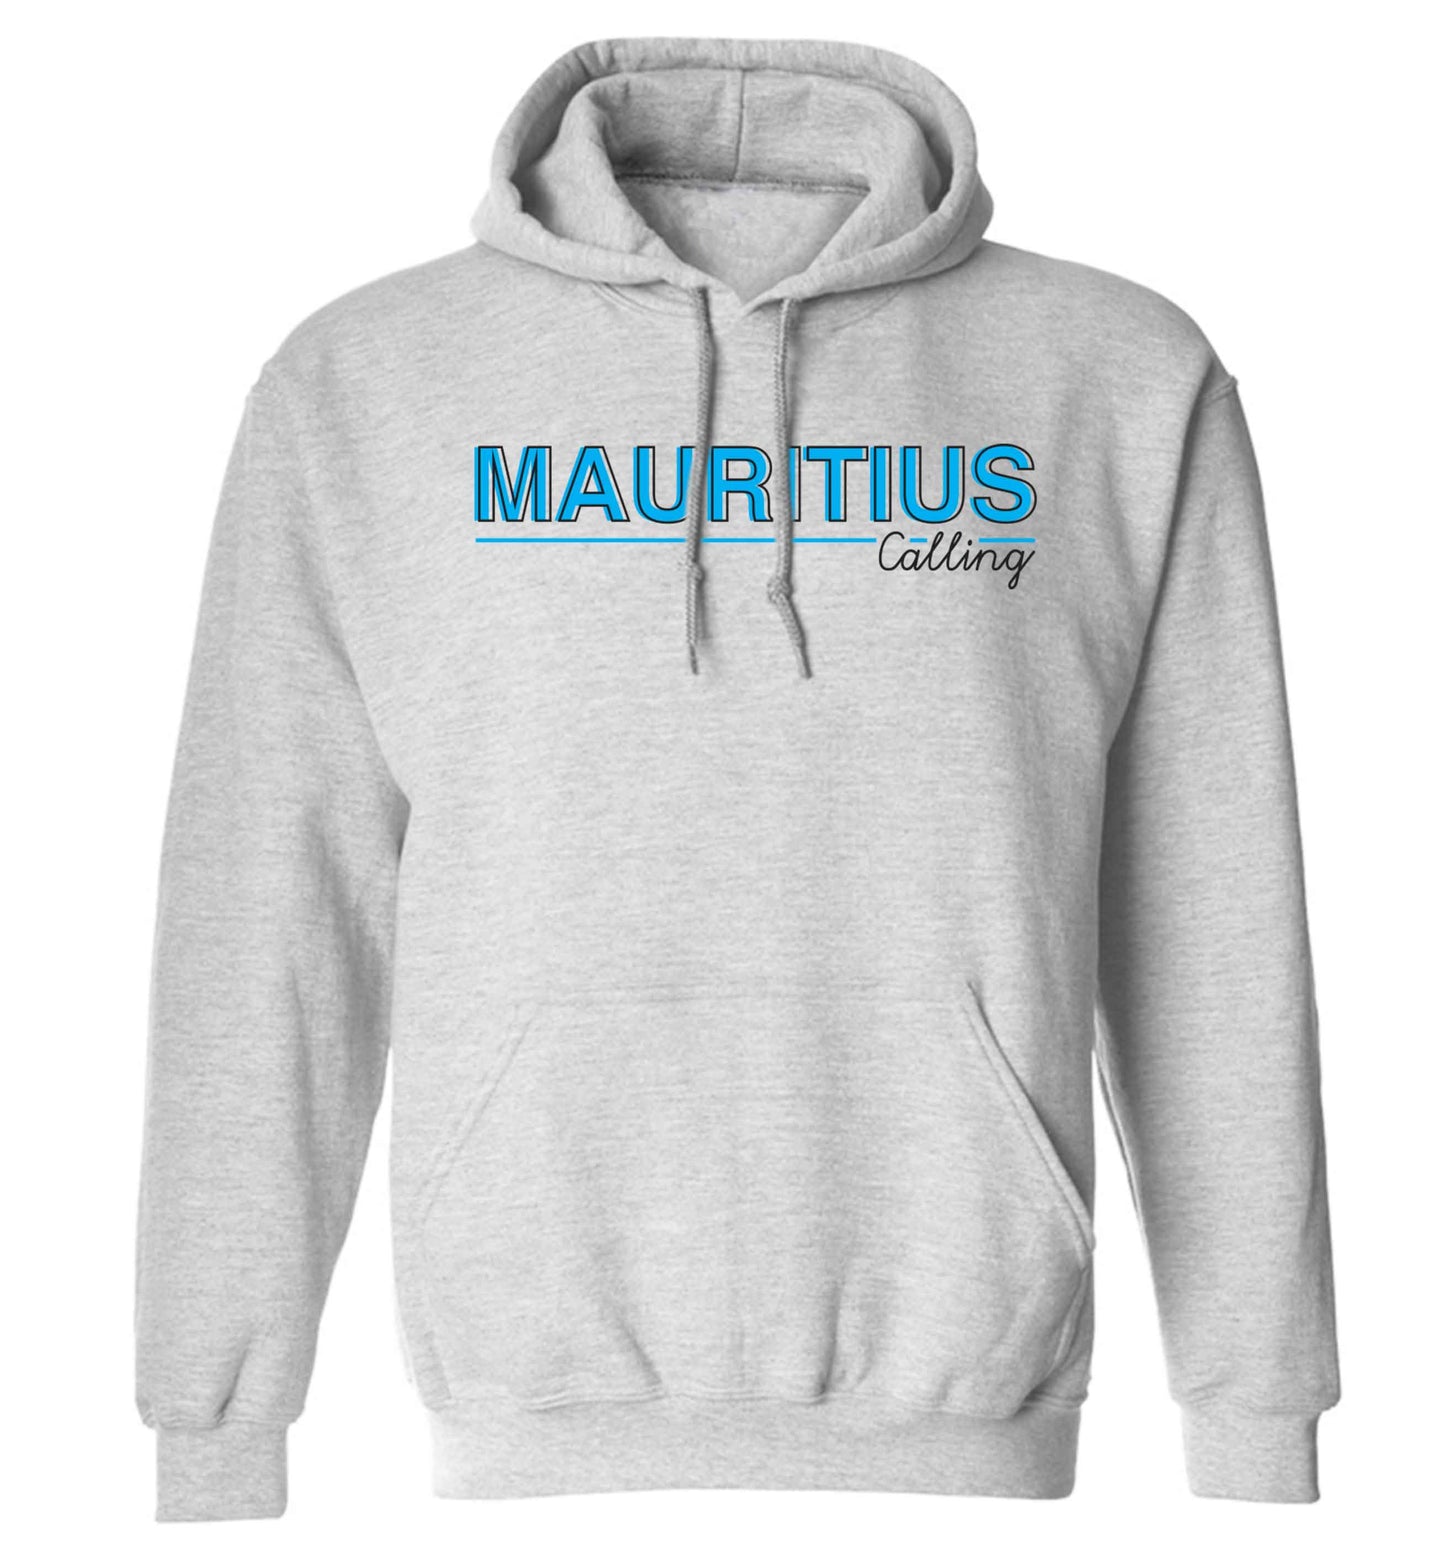 Mauritius calling adults unisex grey hoodie 2XL